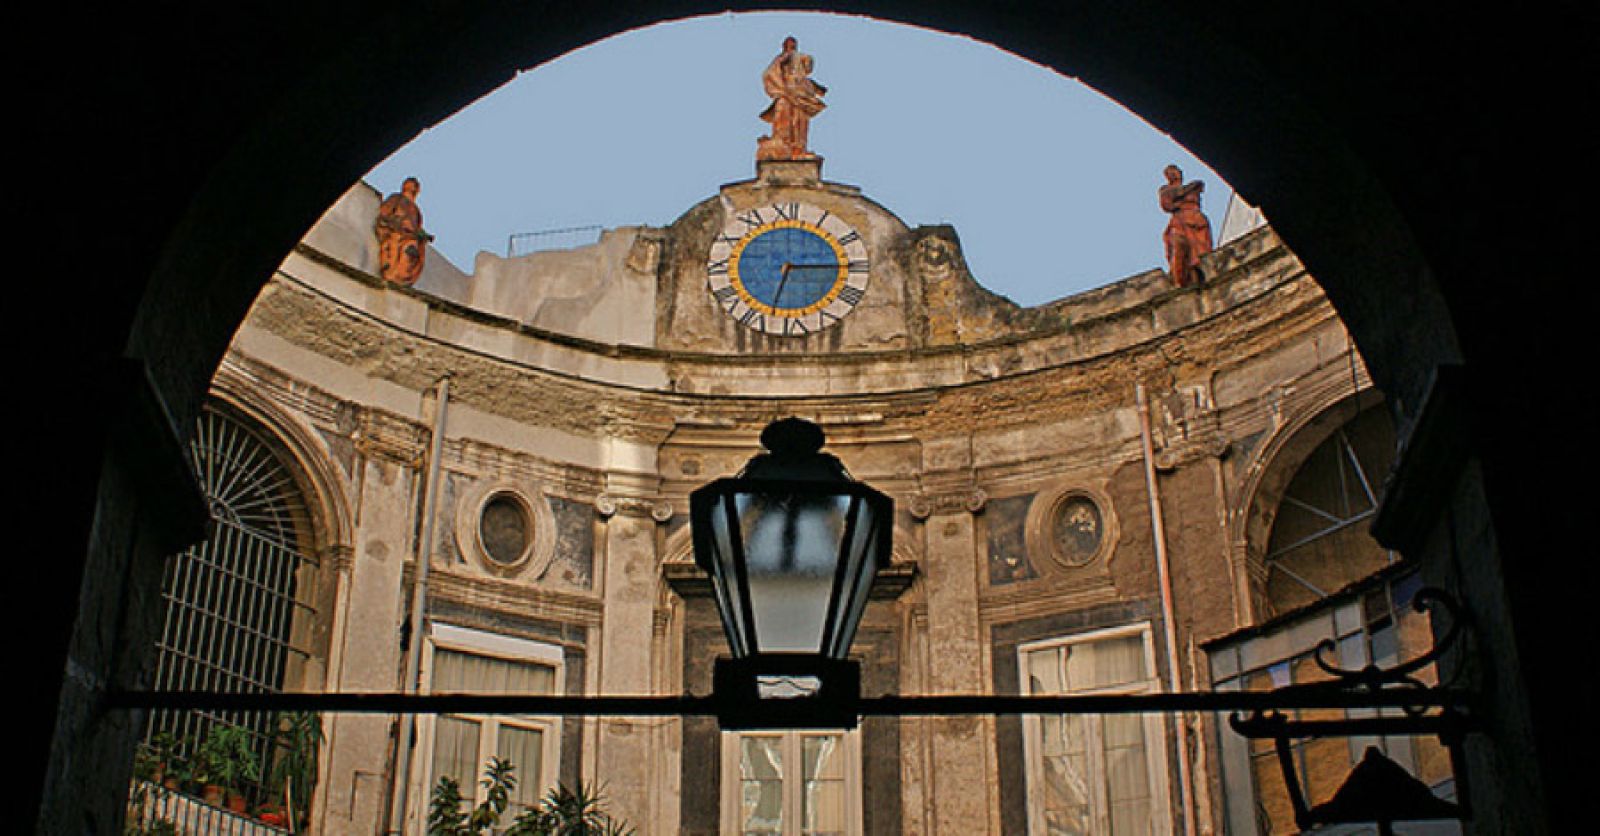 Palazzo Spinelli